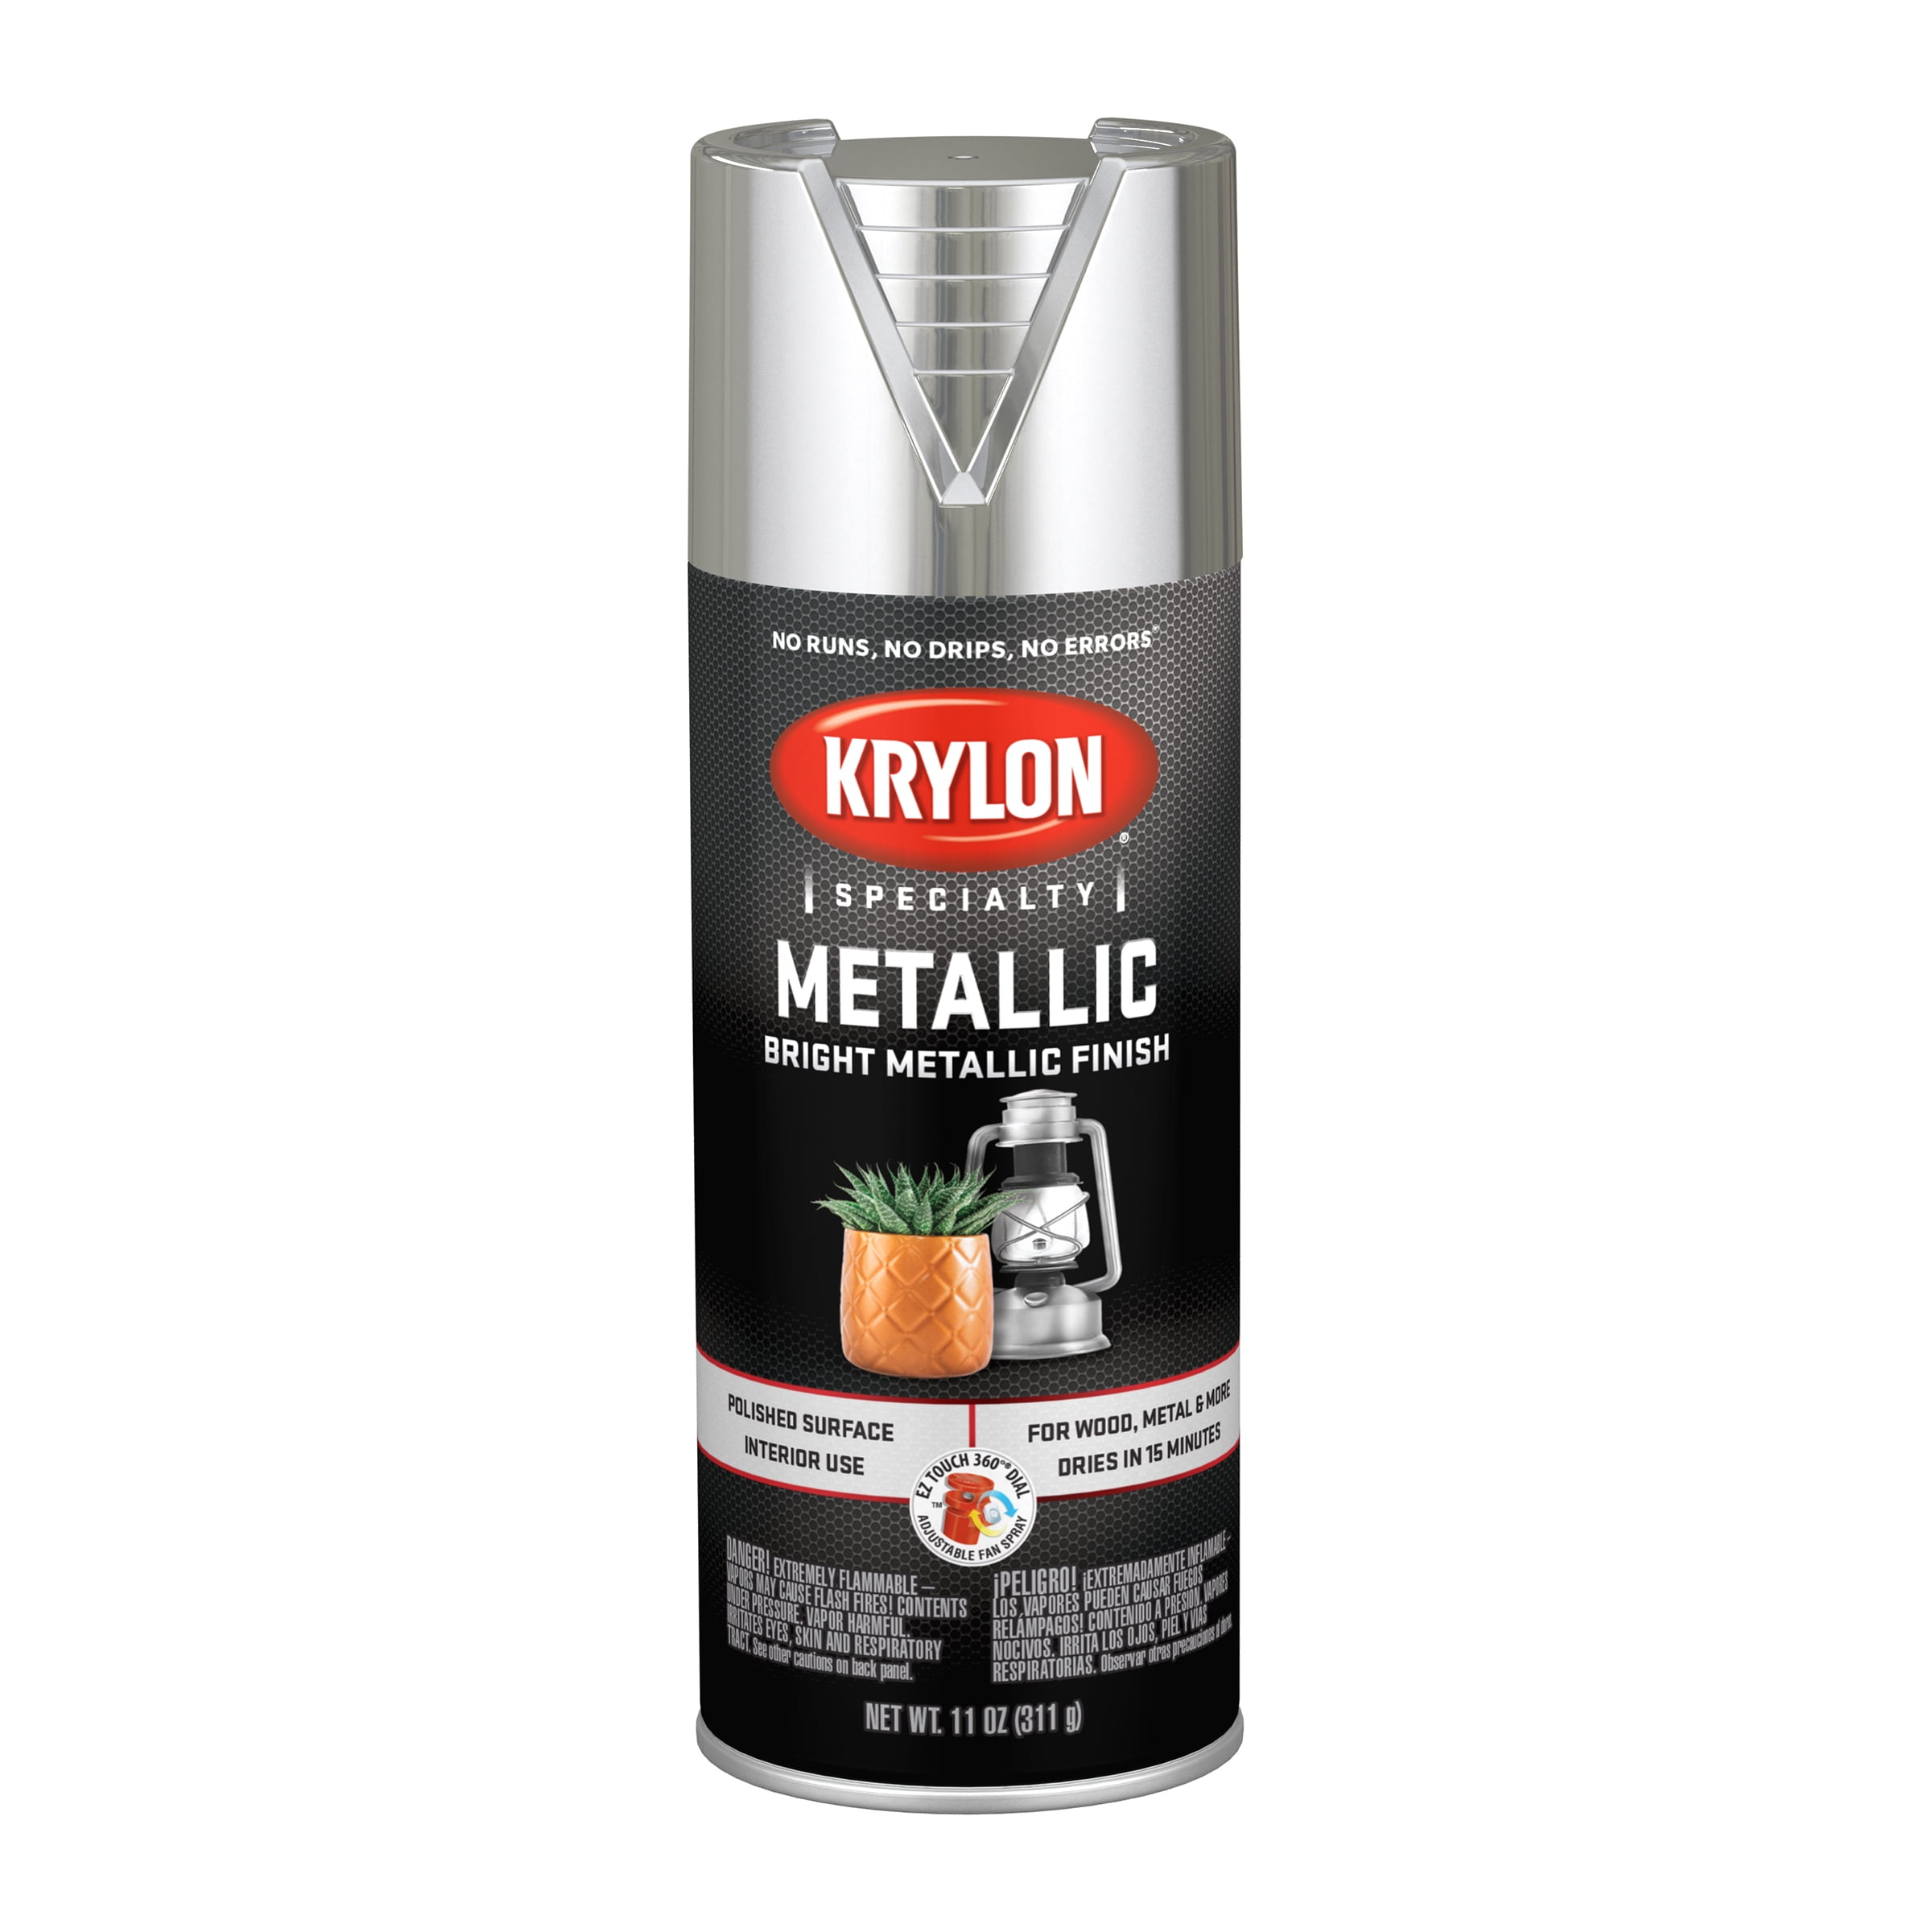 Krylon ColorMaster Silver Spray Paint 51511